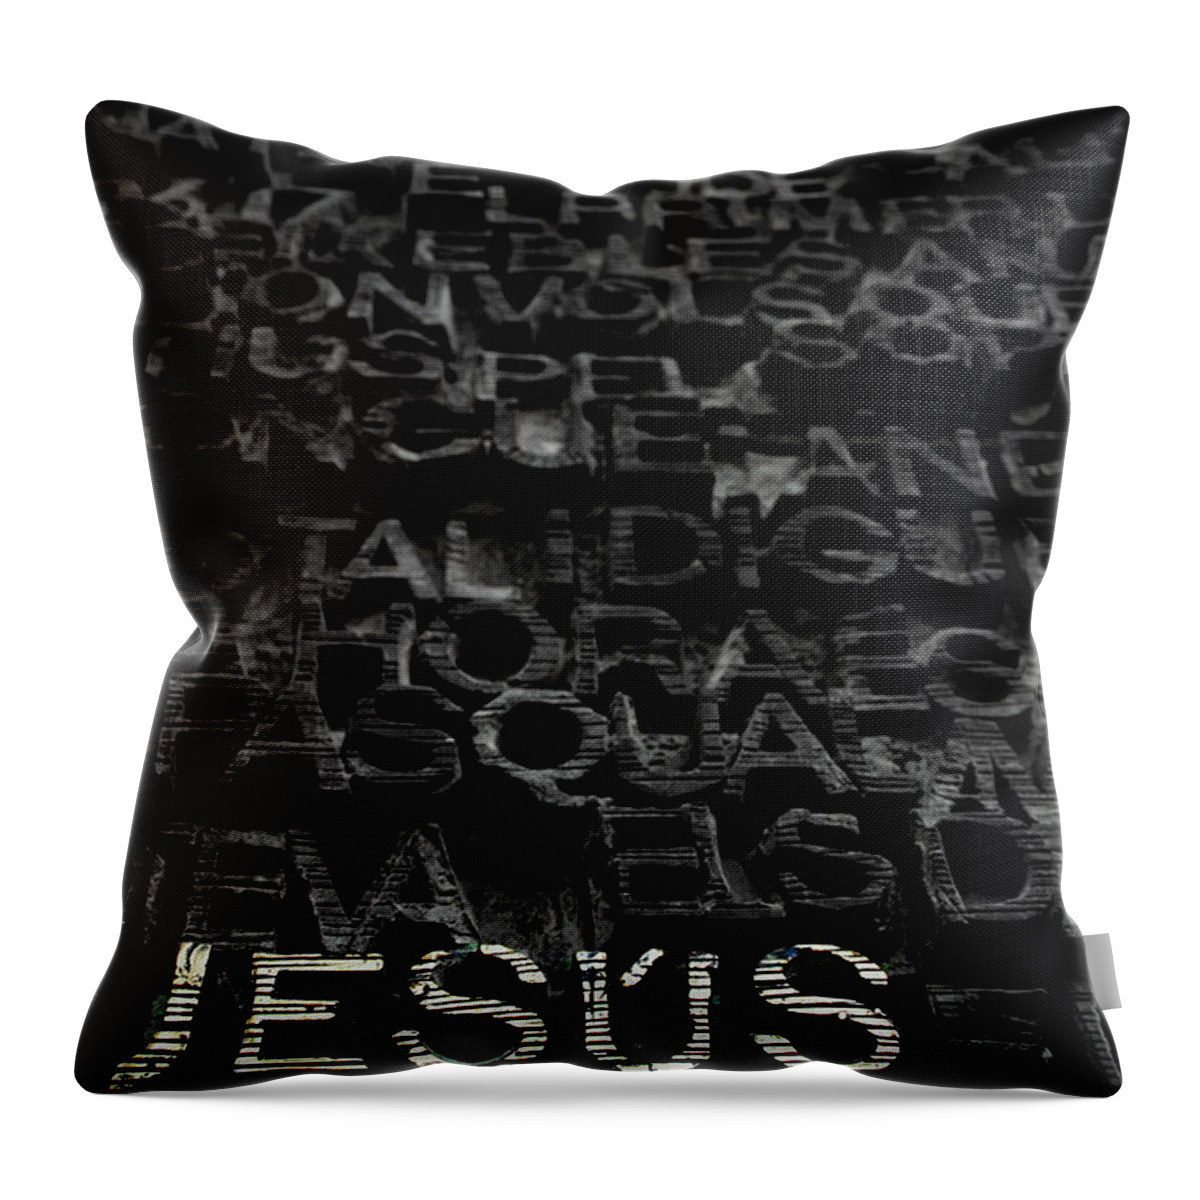 Antonio Gaudi Throw Pillow featuring the photograph Jesus by Tito Slack